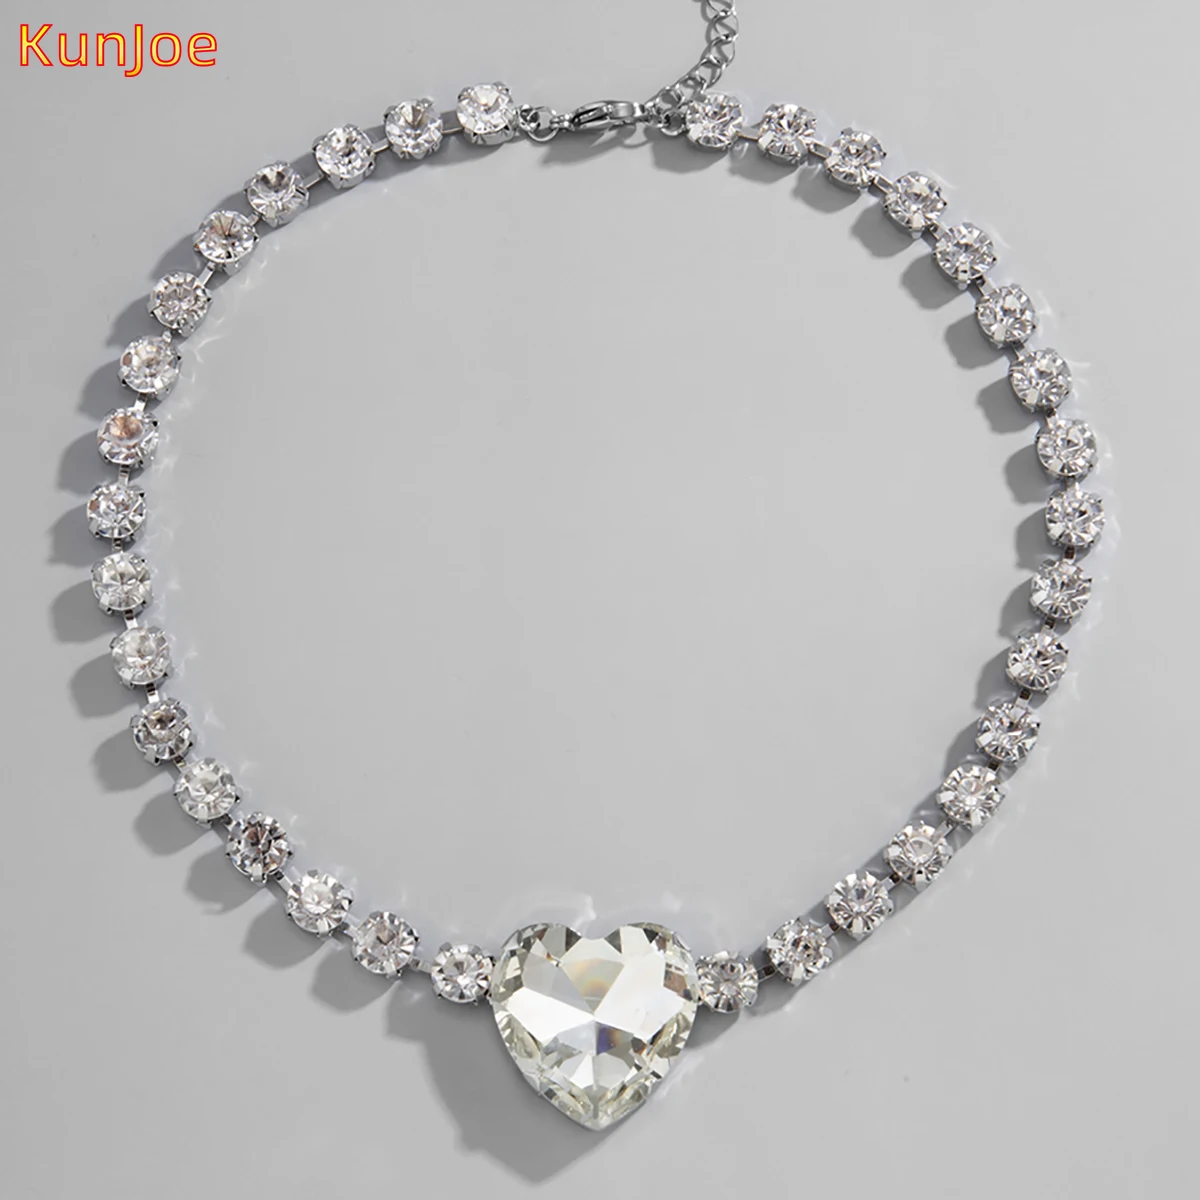 

KunJoe Fashion White Crystal Zircon Heart Pendant Necklace Women Lover Clavicle Choker Valentine Jewelry Couples Romantic Gift